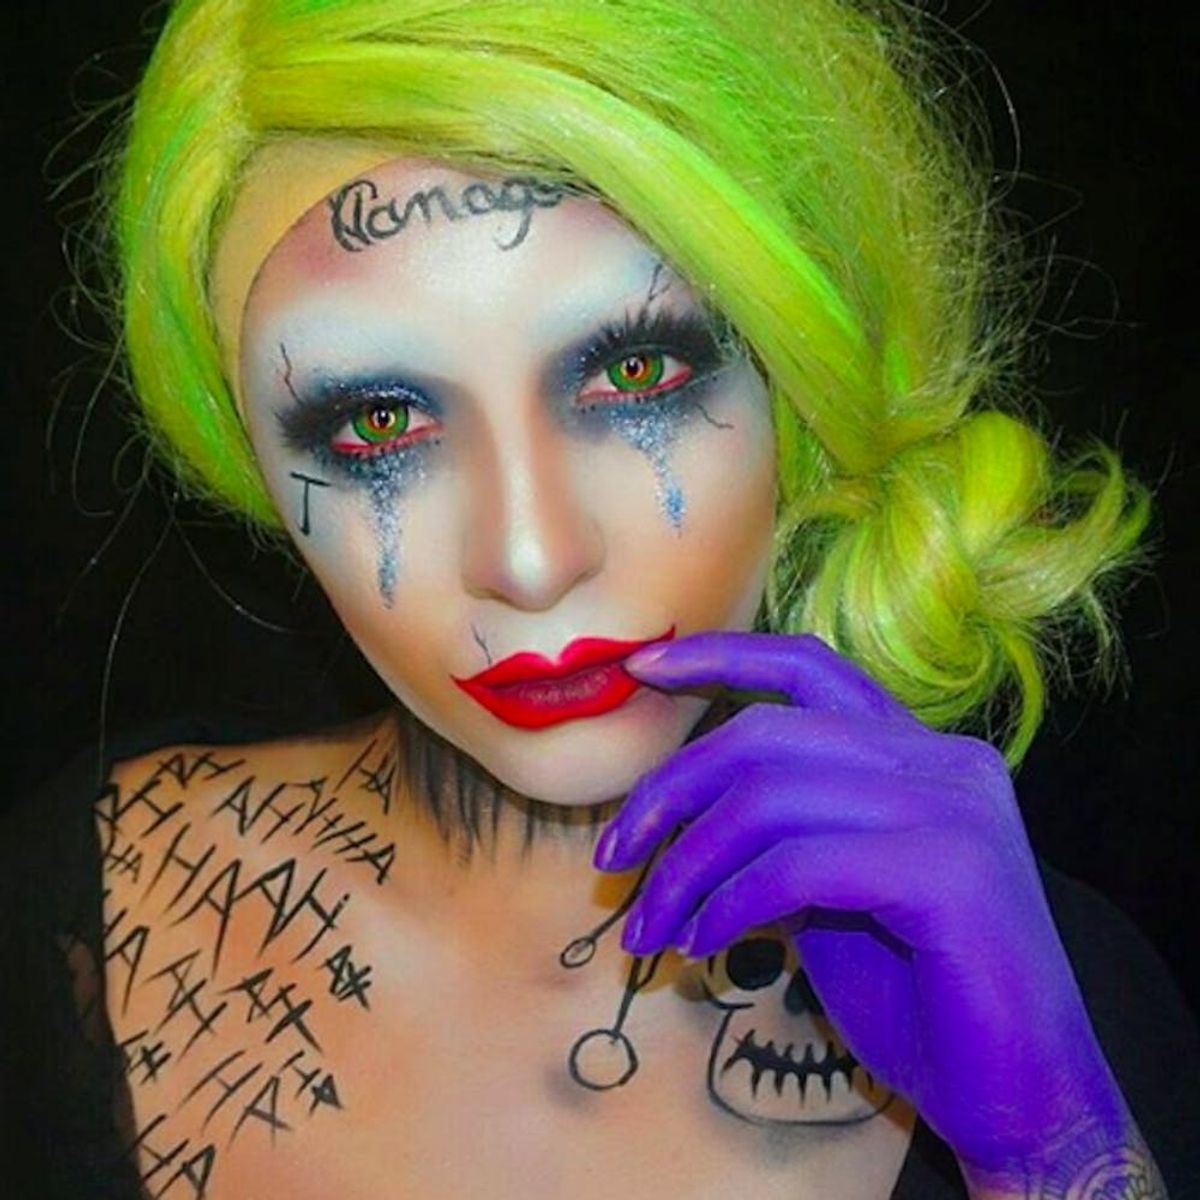 Get Creepy With This Spooky Joker Halloween Makeup - Brit + Co